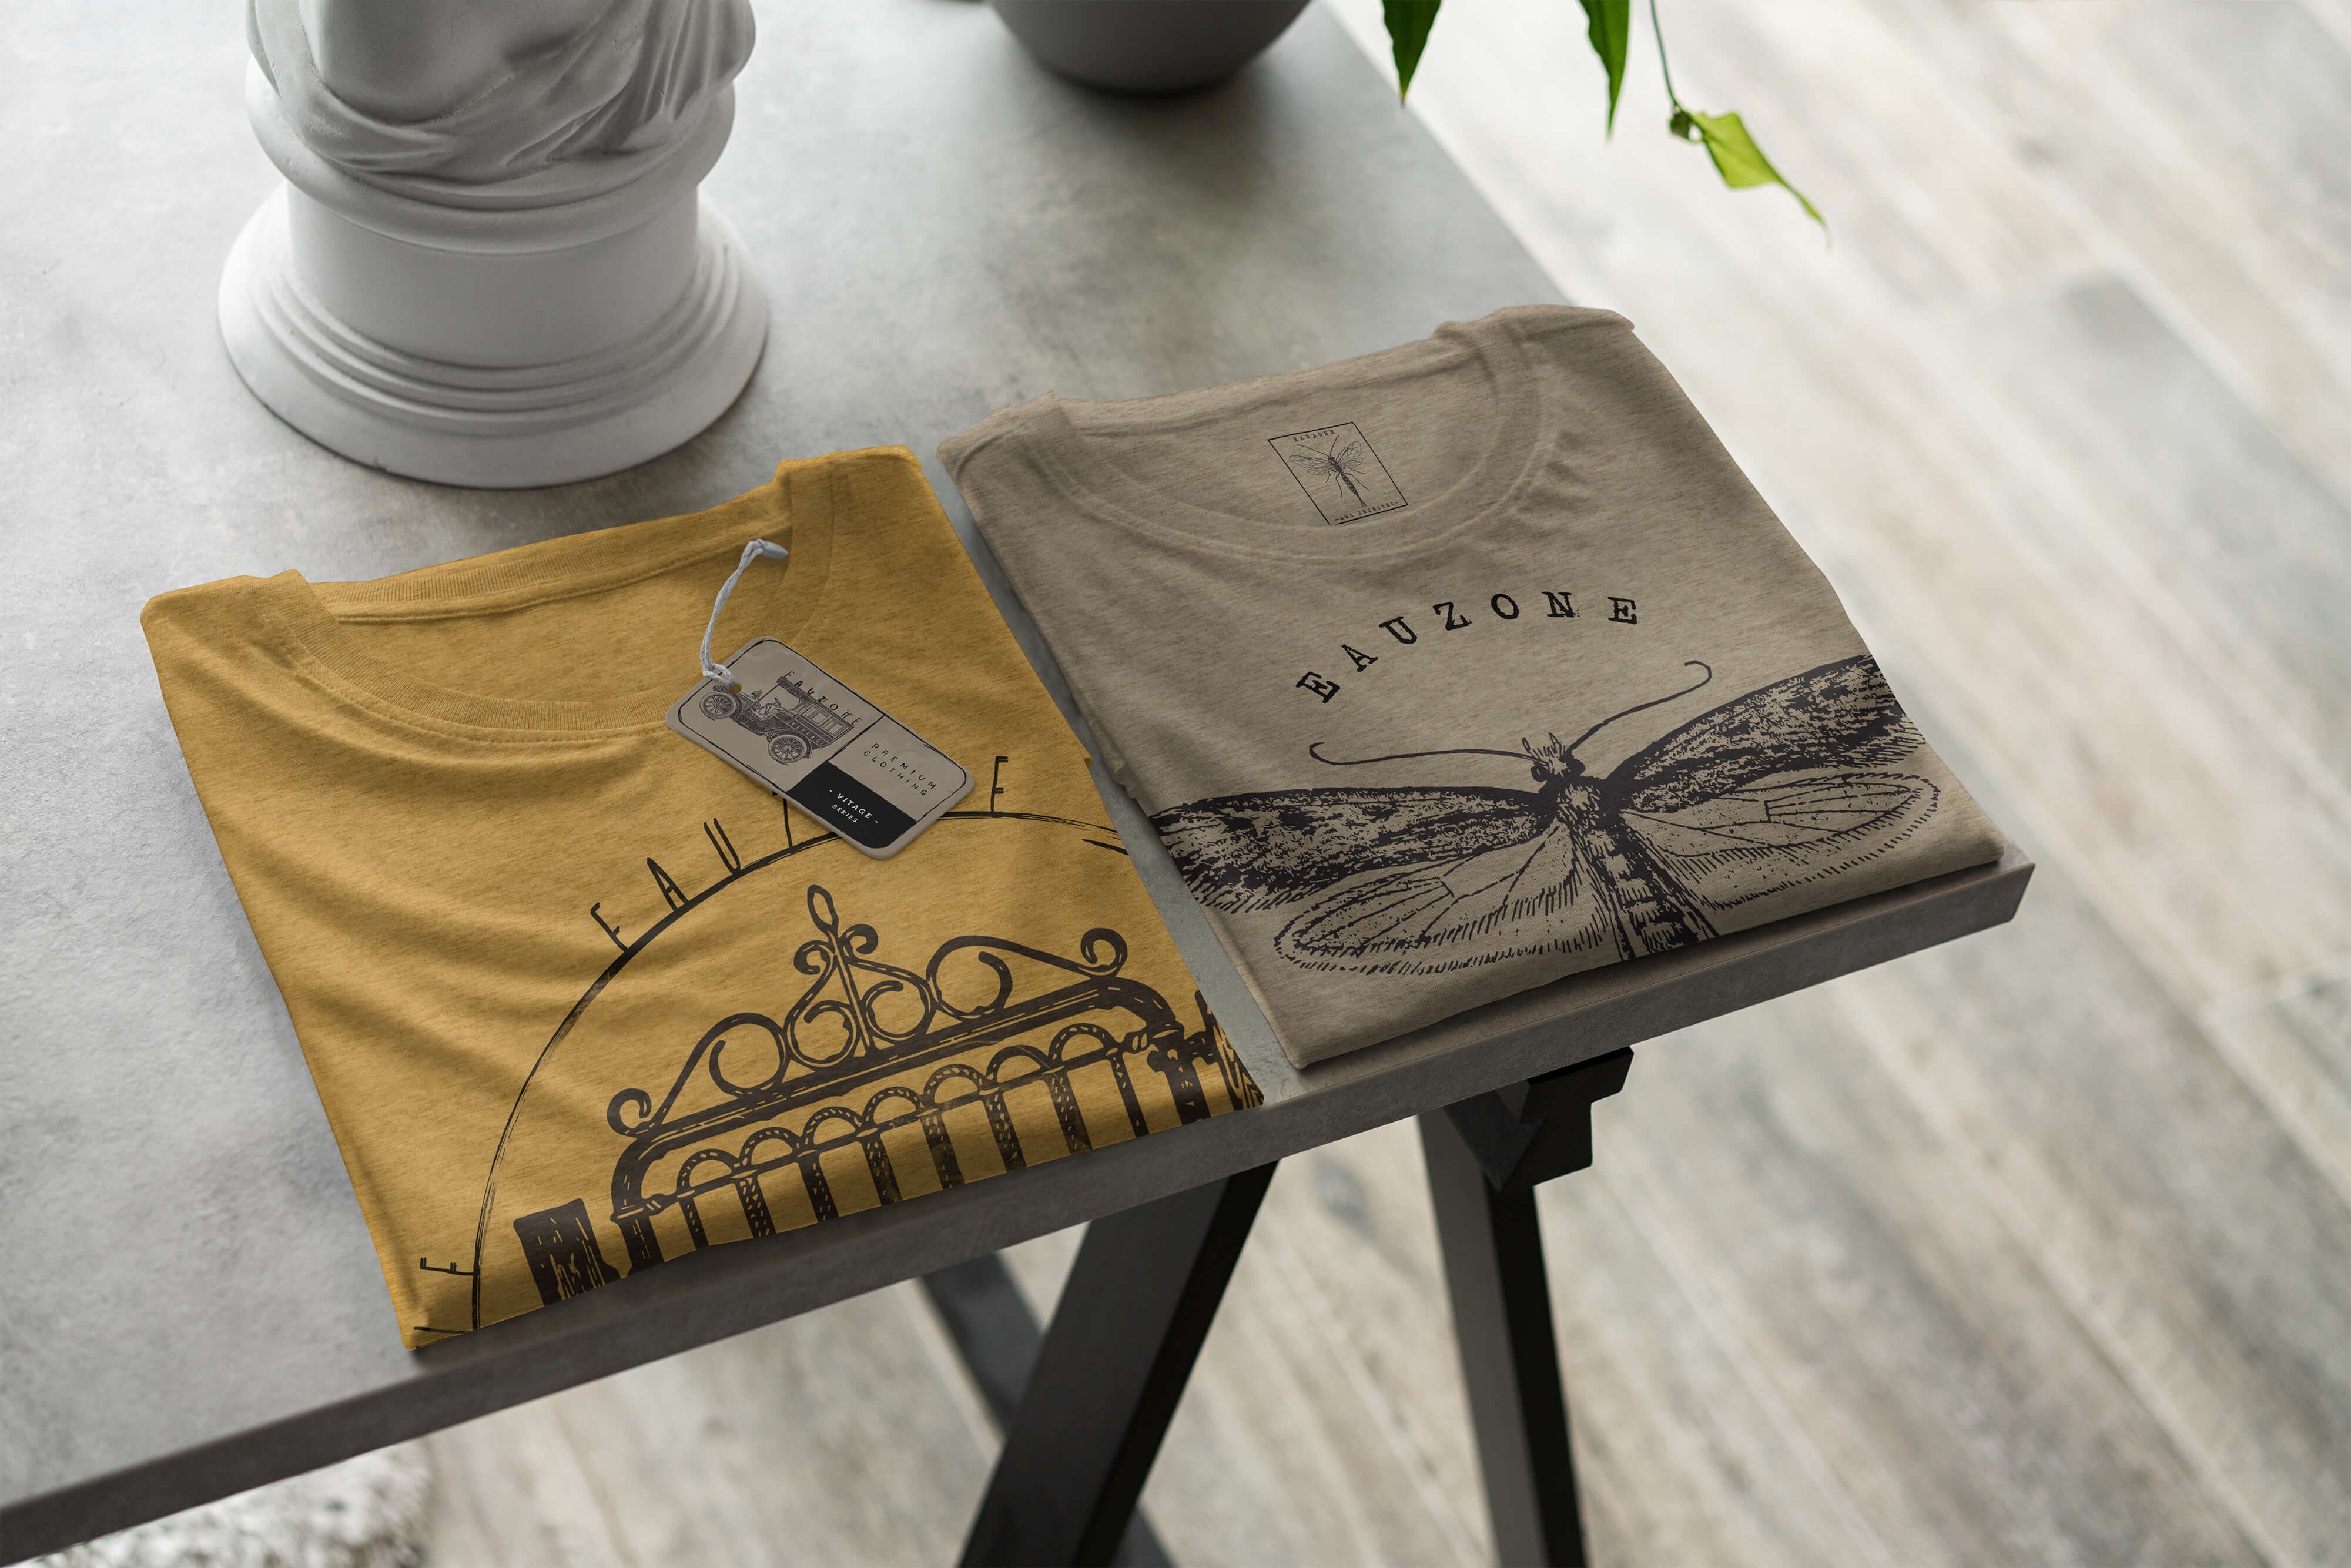 Tor T-Shirt Vintage Art Gold T-Shirt Herren Sinus Antique